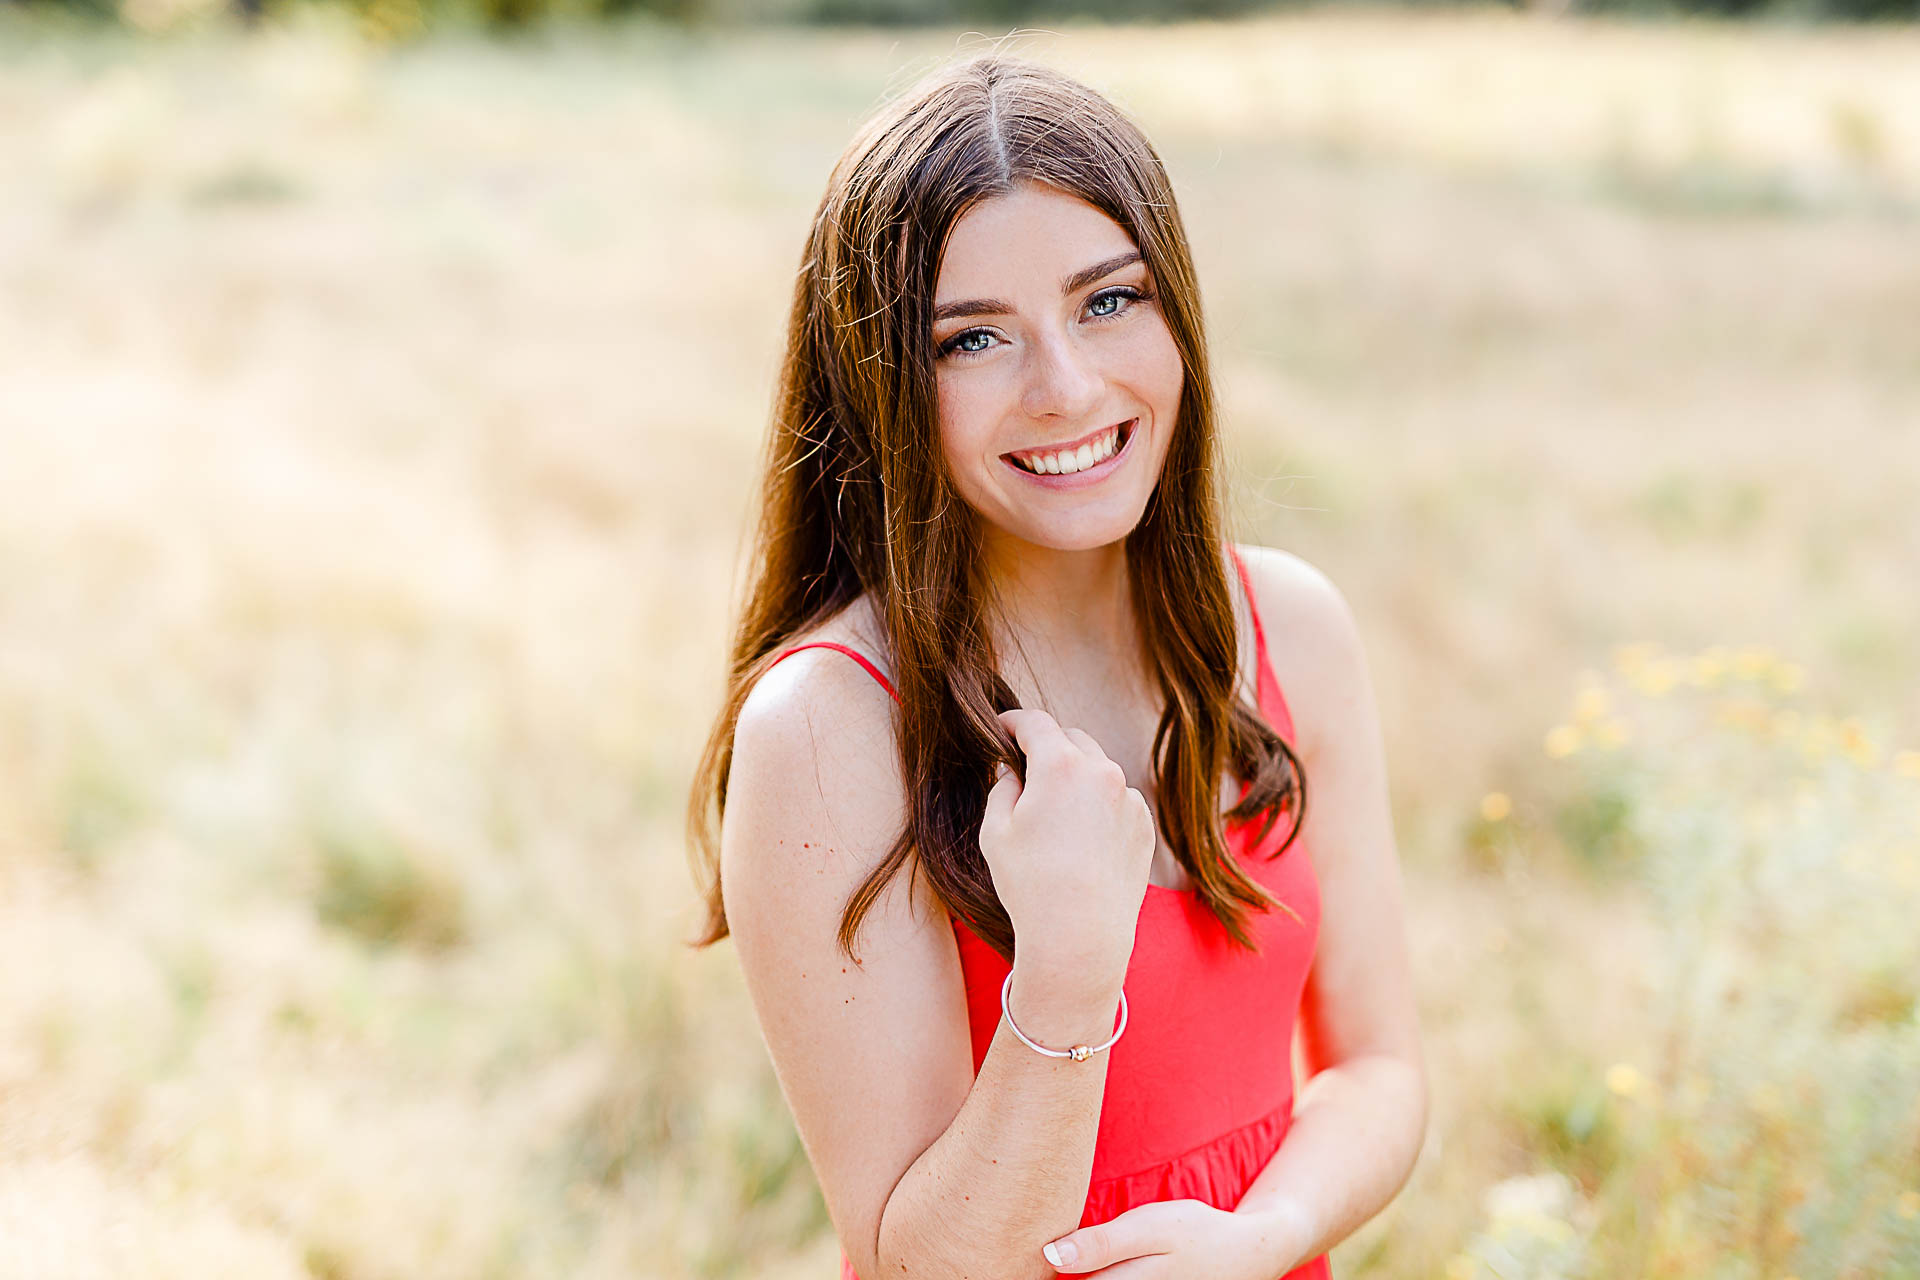 Photo by Duxbury senior portrait photographer Christina Runnals | High school senior girl wearing a red dress